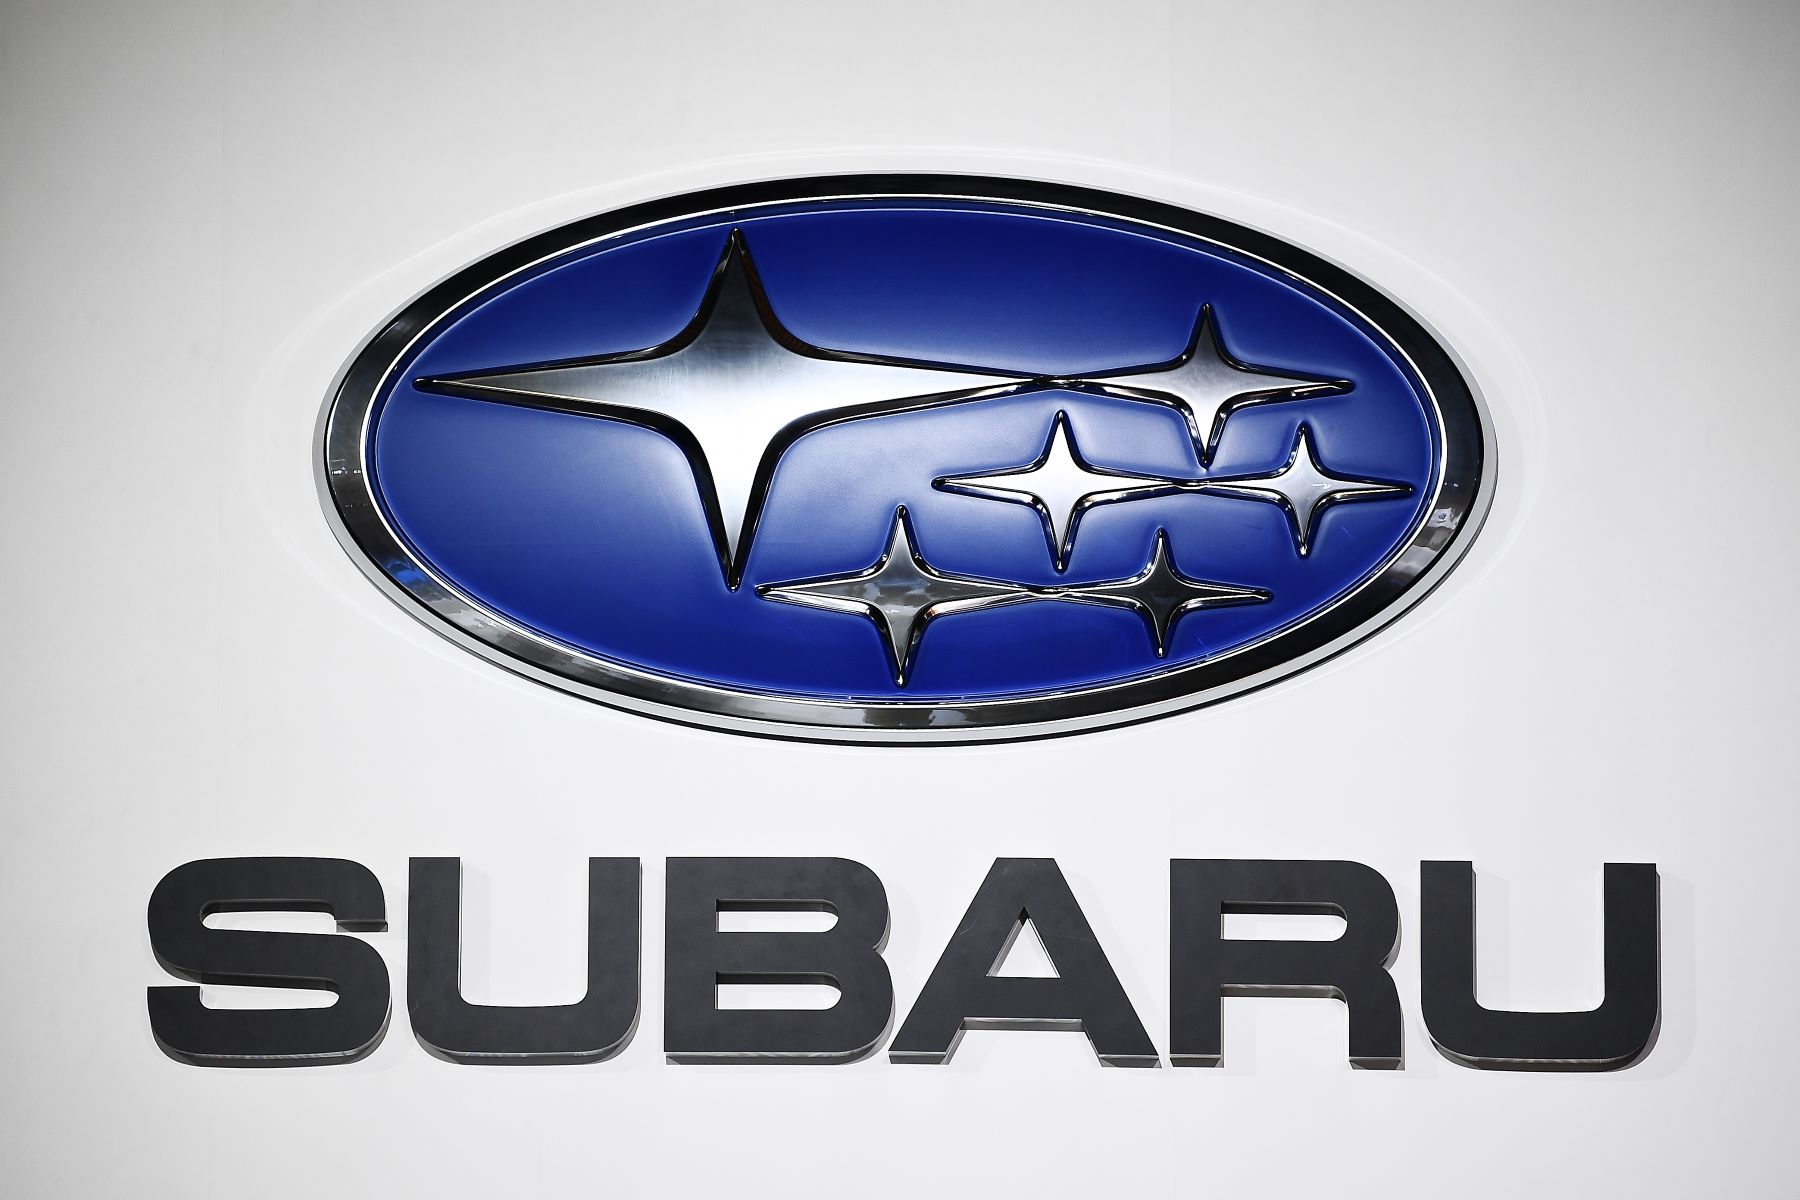 The Subaru logo